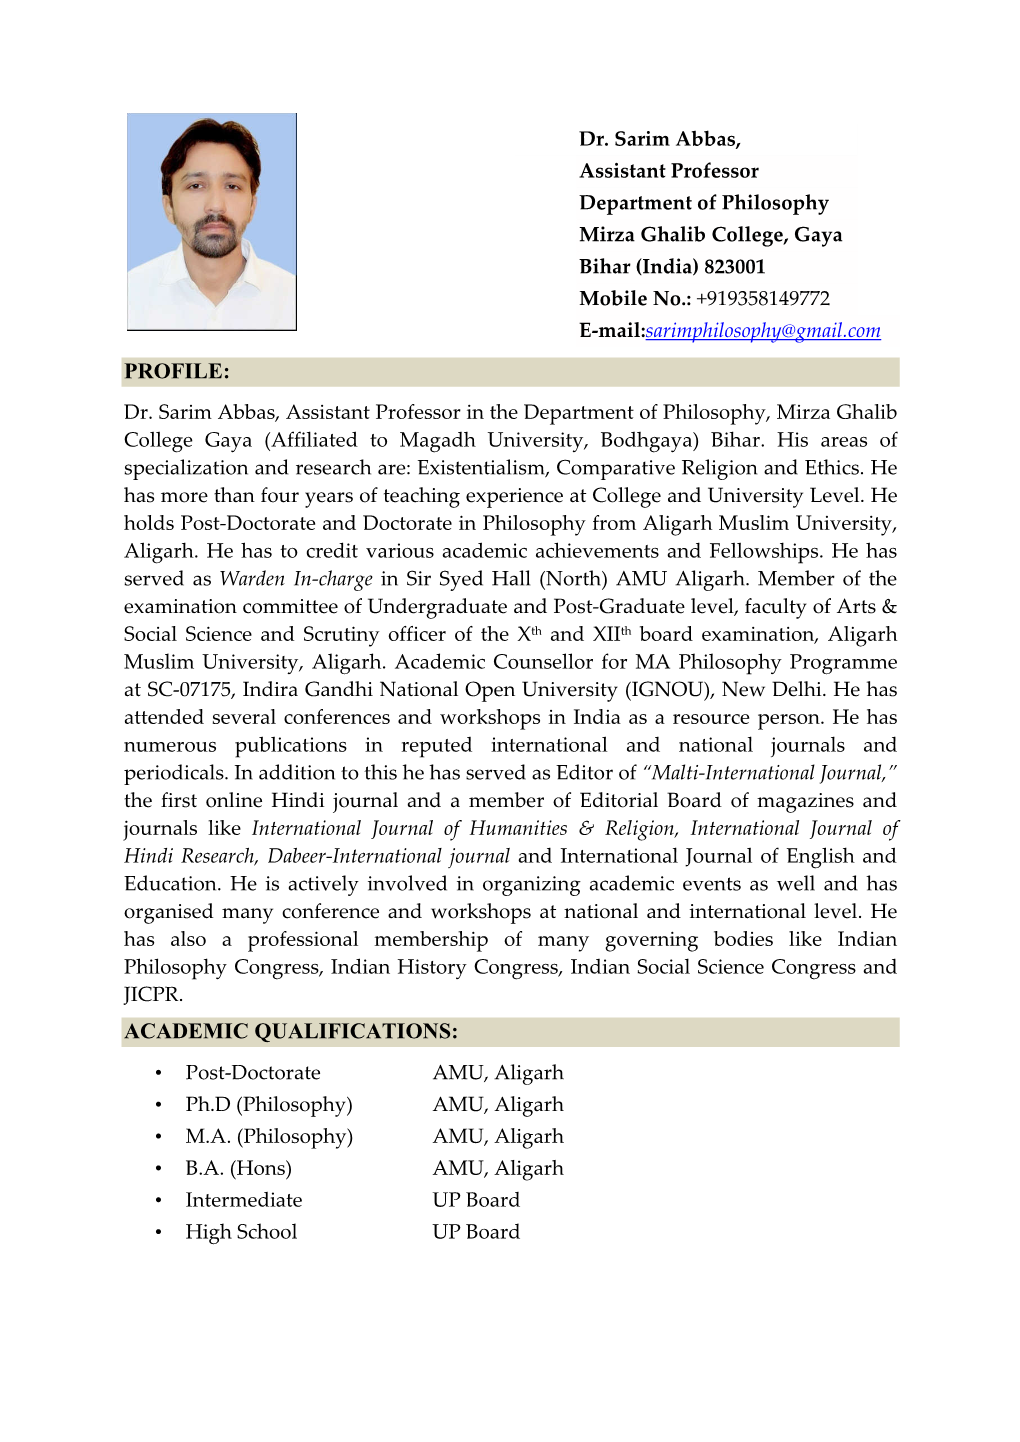 Dr. Sarim Abbas, Assistant Professor Department of Philosophy Mirza Ghalib College, Gaya Bihar